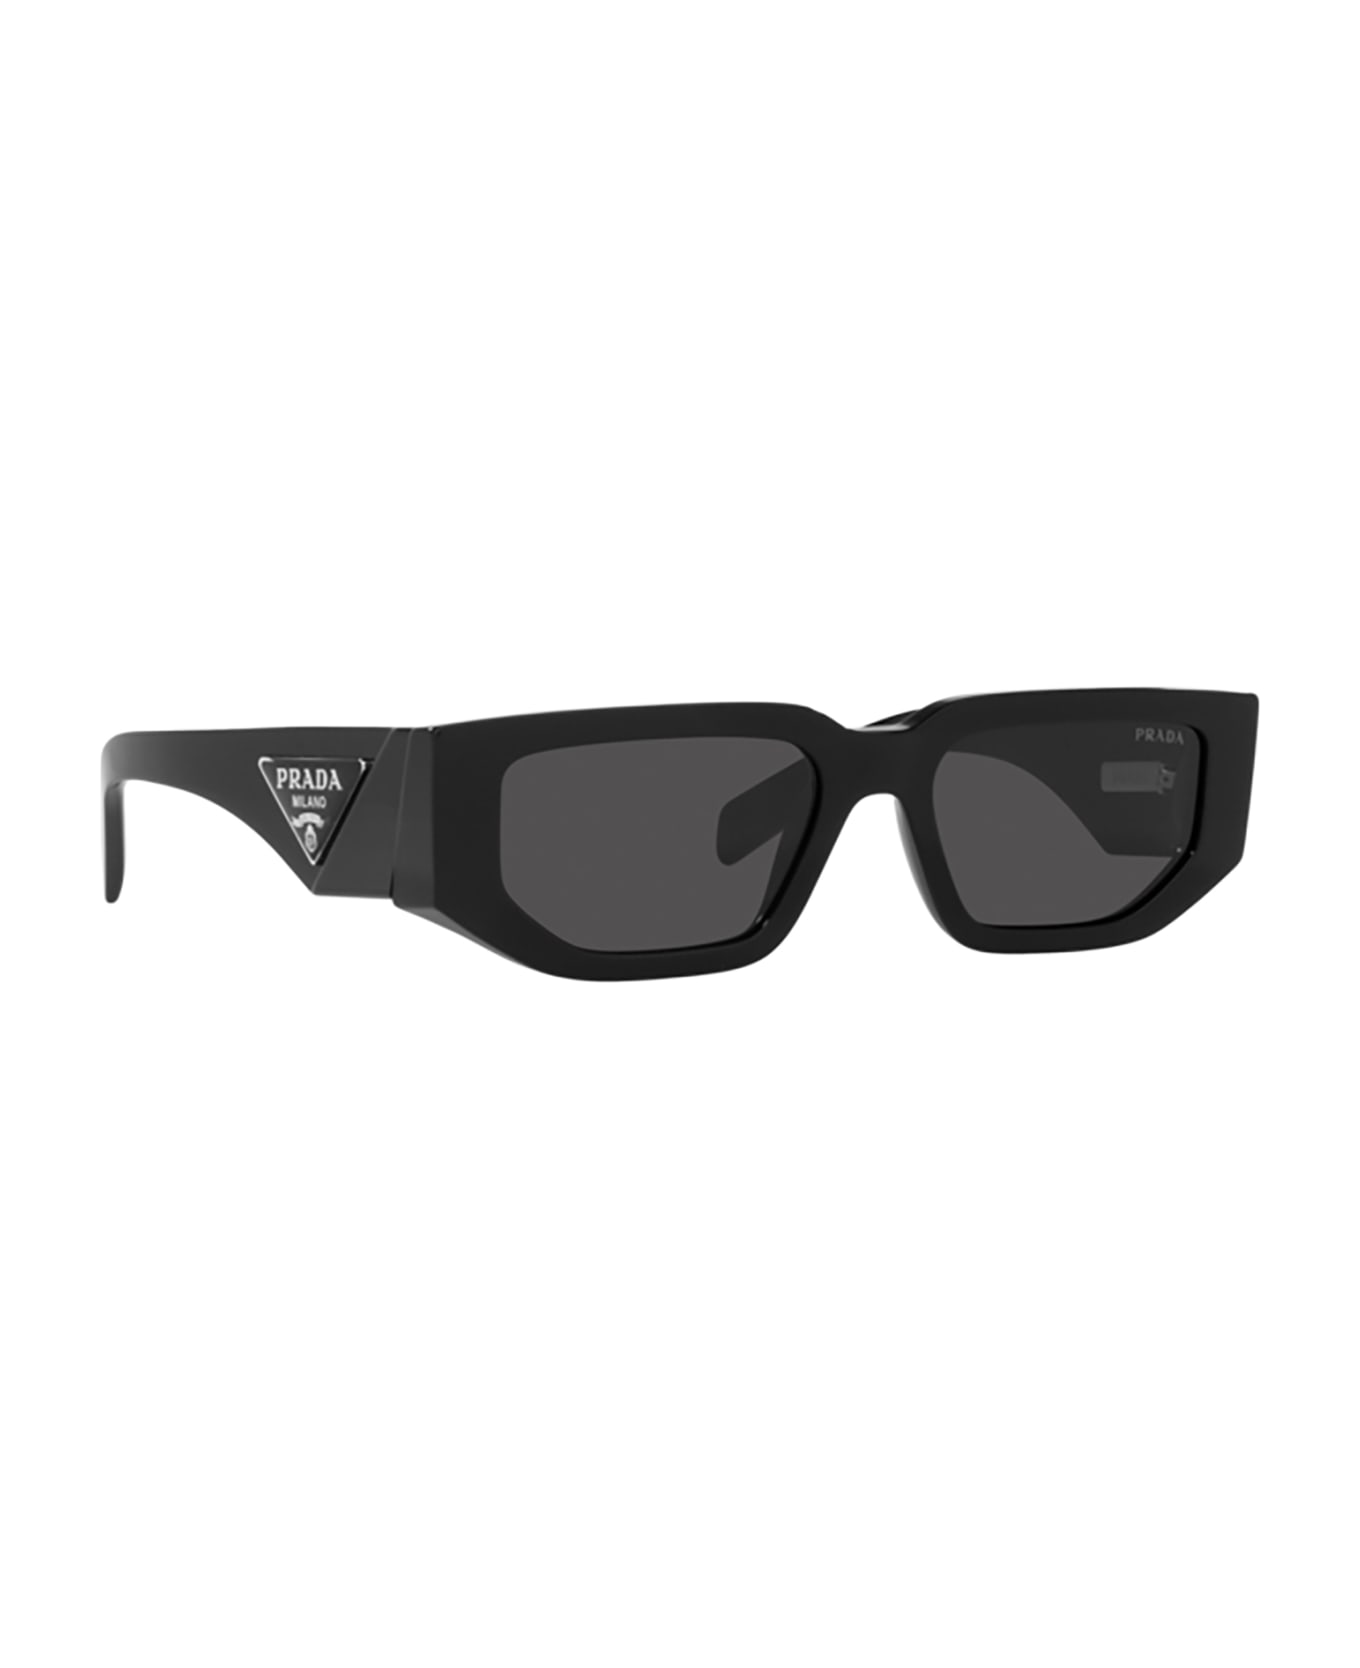 Prada Eyewear Pr 09zs Black Sunglasses - Black